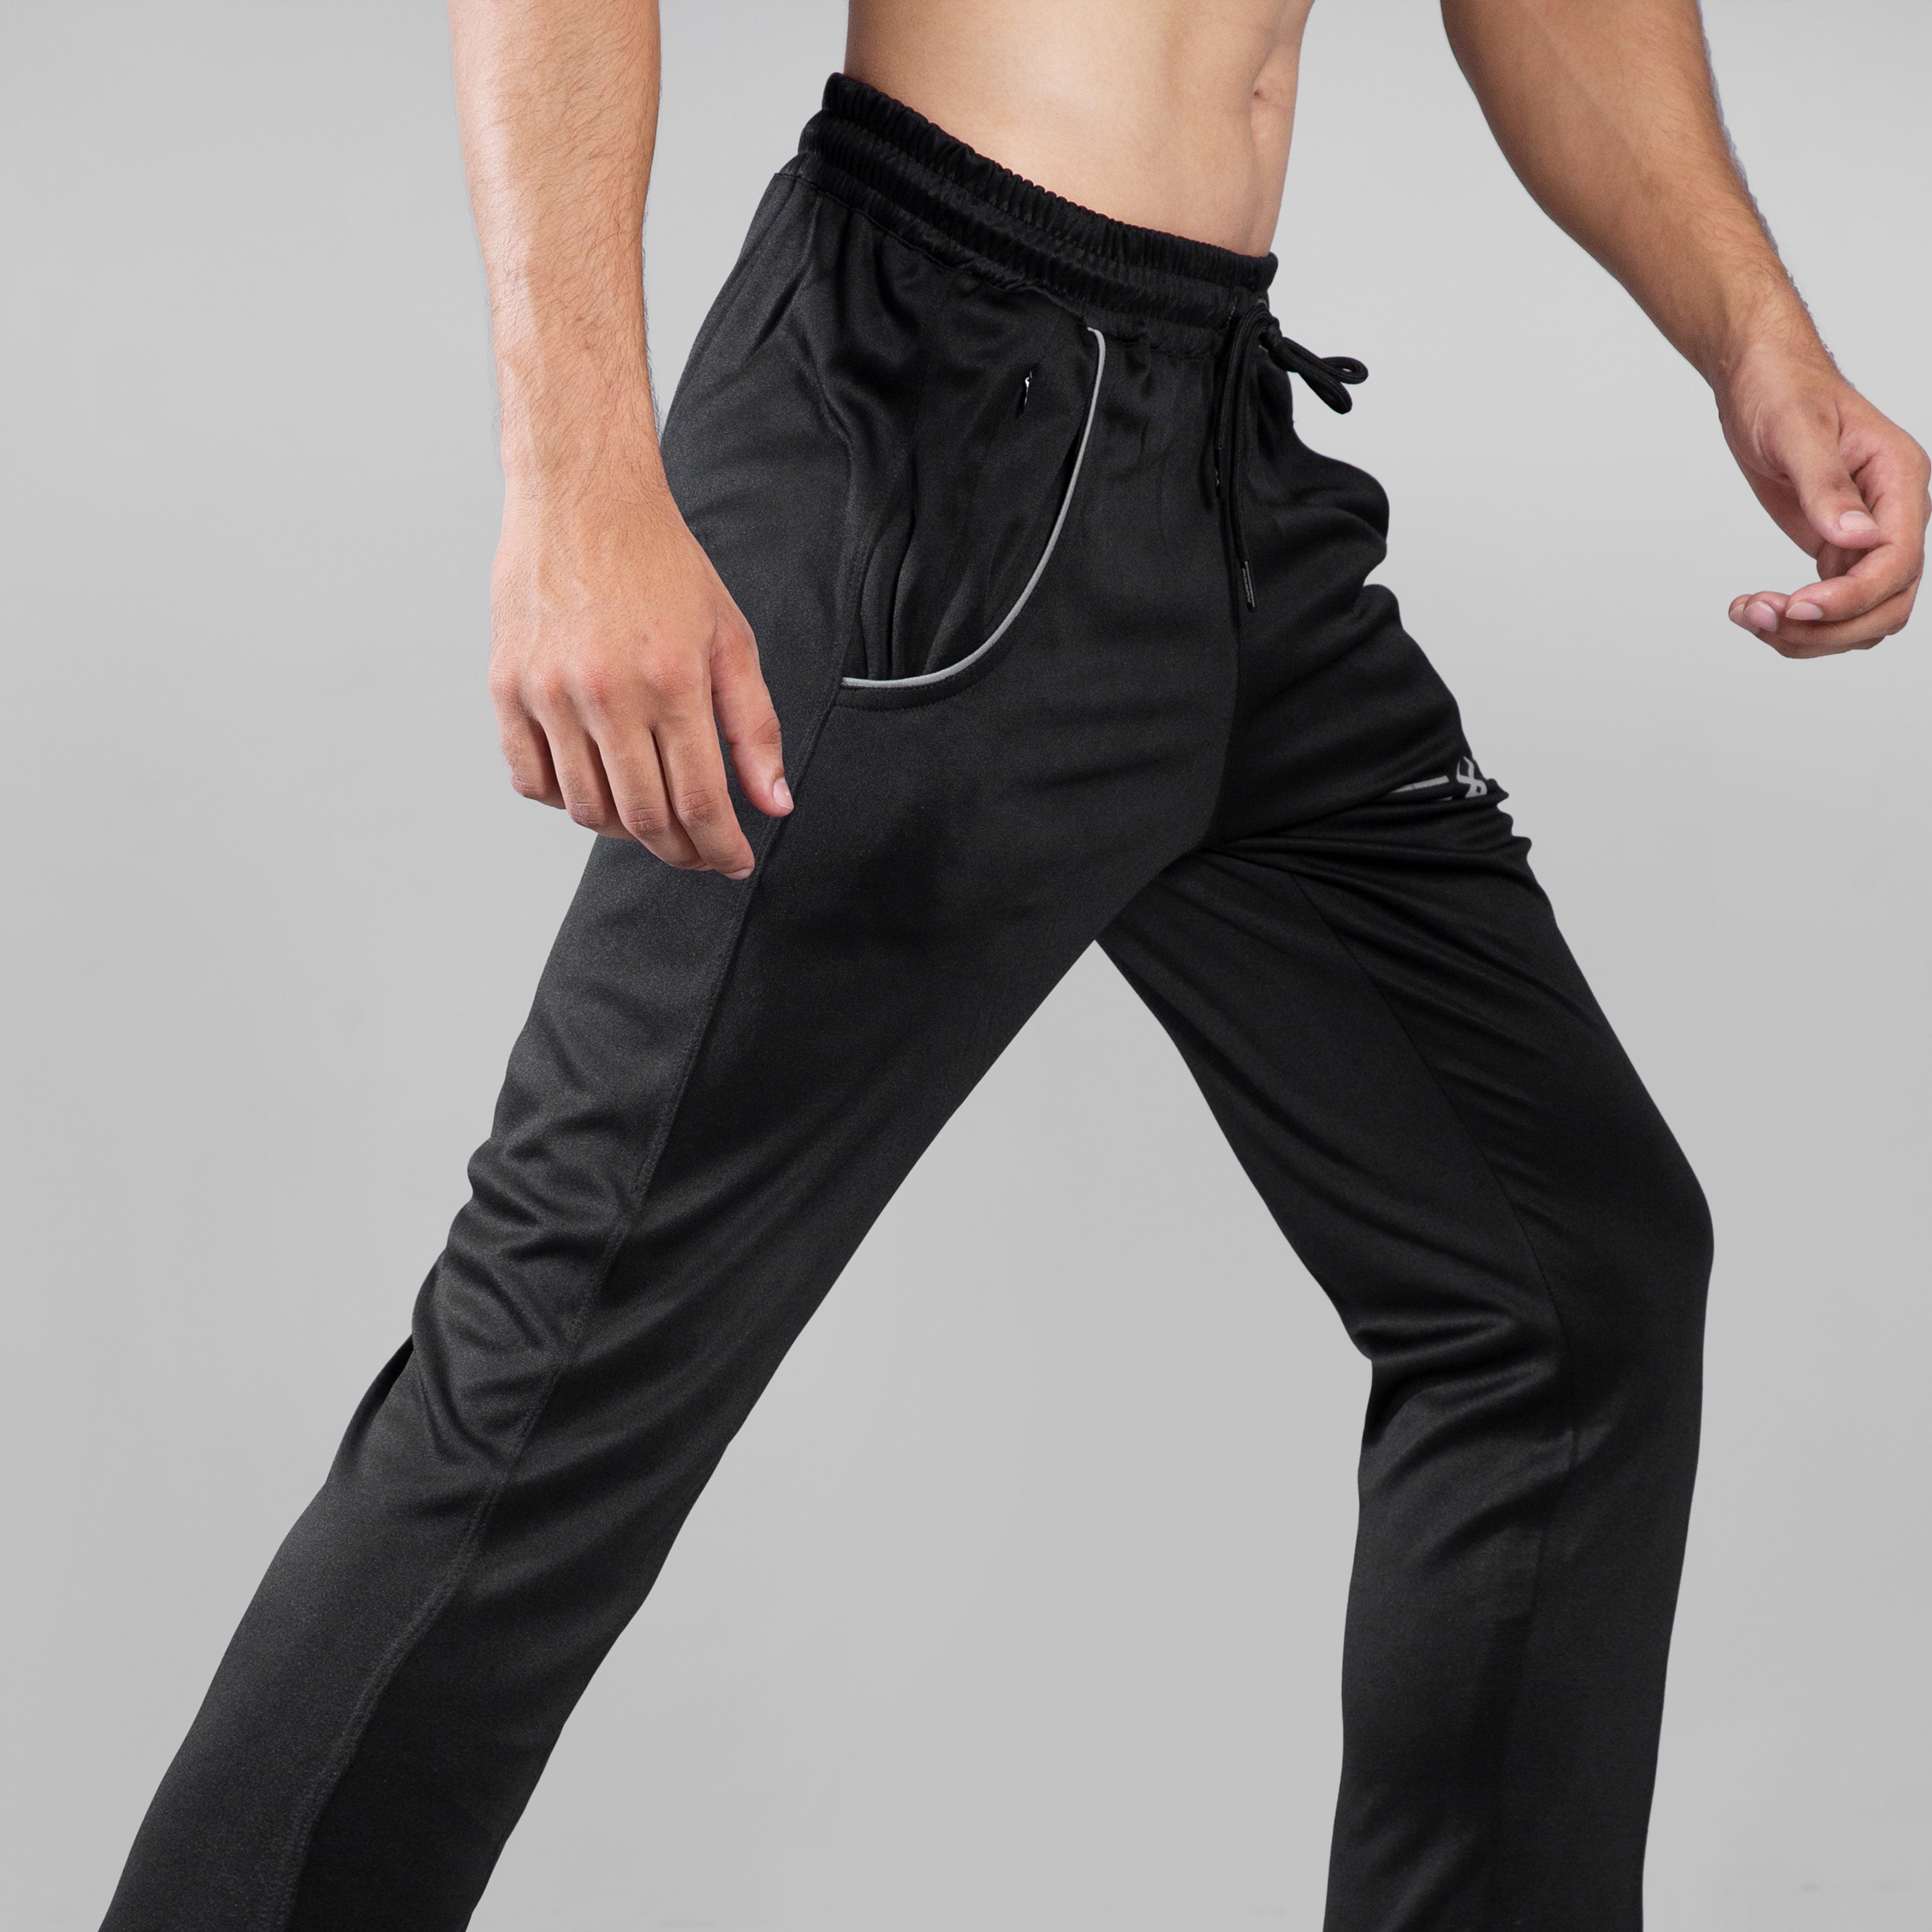 COTTON Activewear Joggers Black, 4 Pocket,2022 – FIREOX